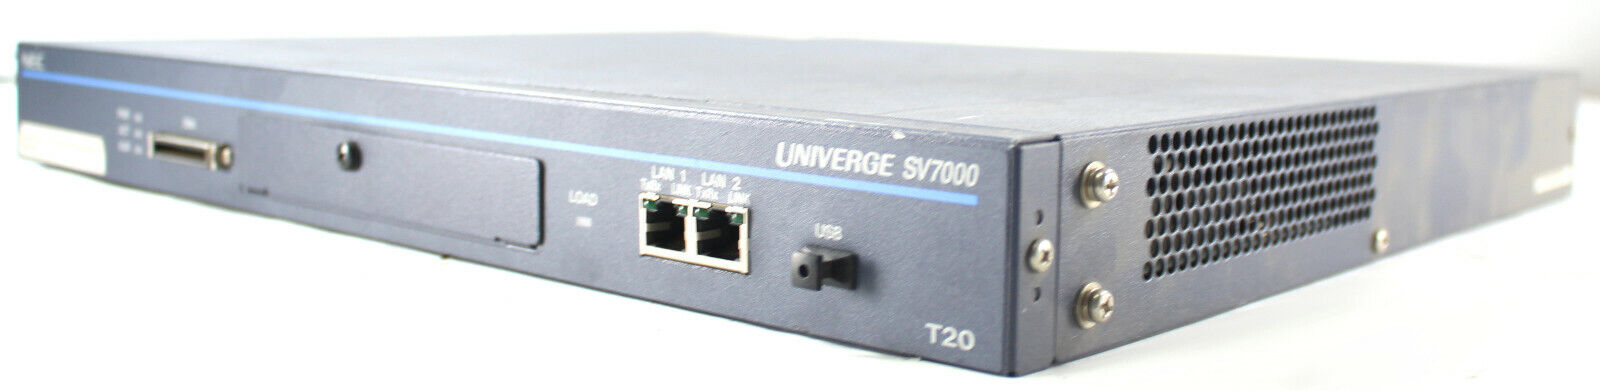 NEC Univerge SV7000 T20 MGCEK-A Telephony Server